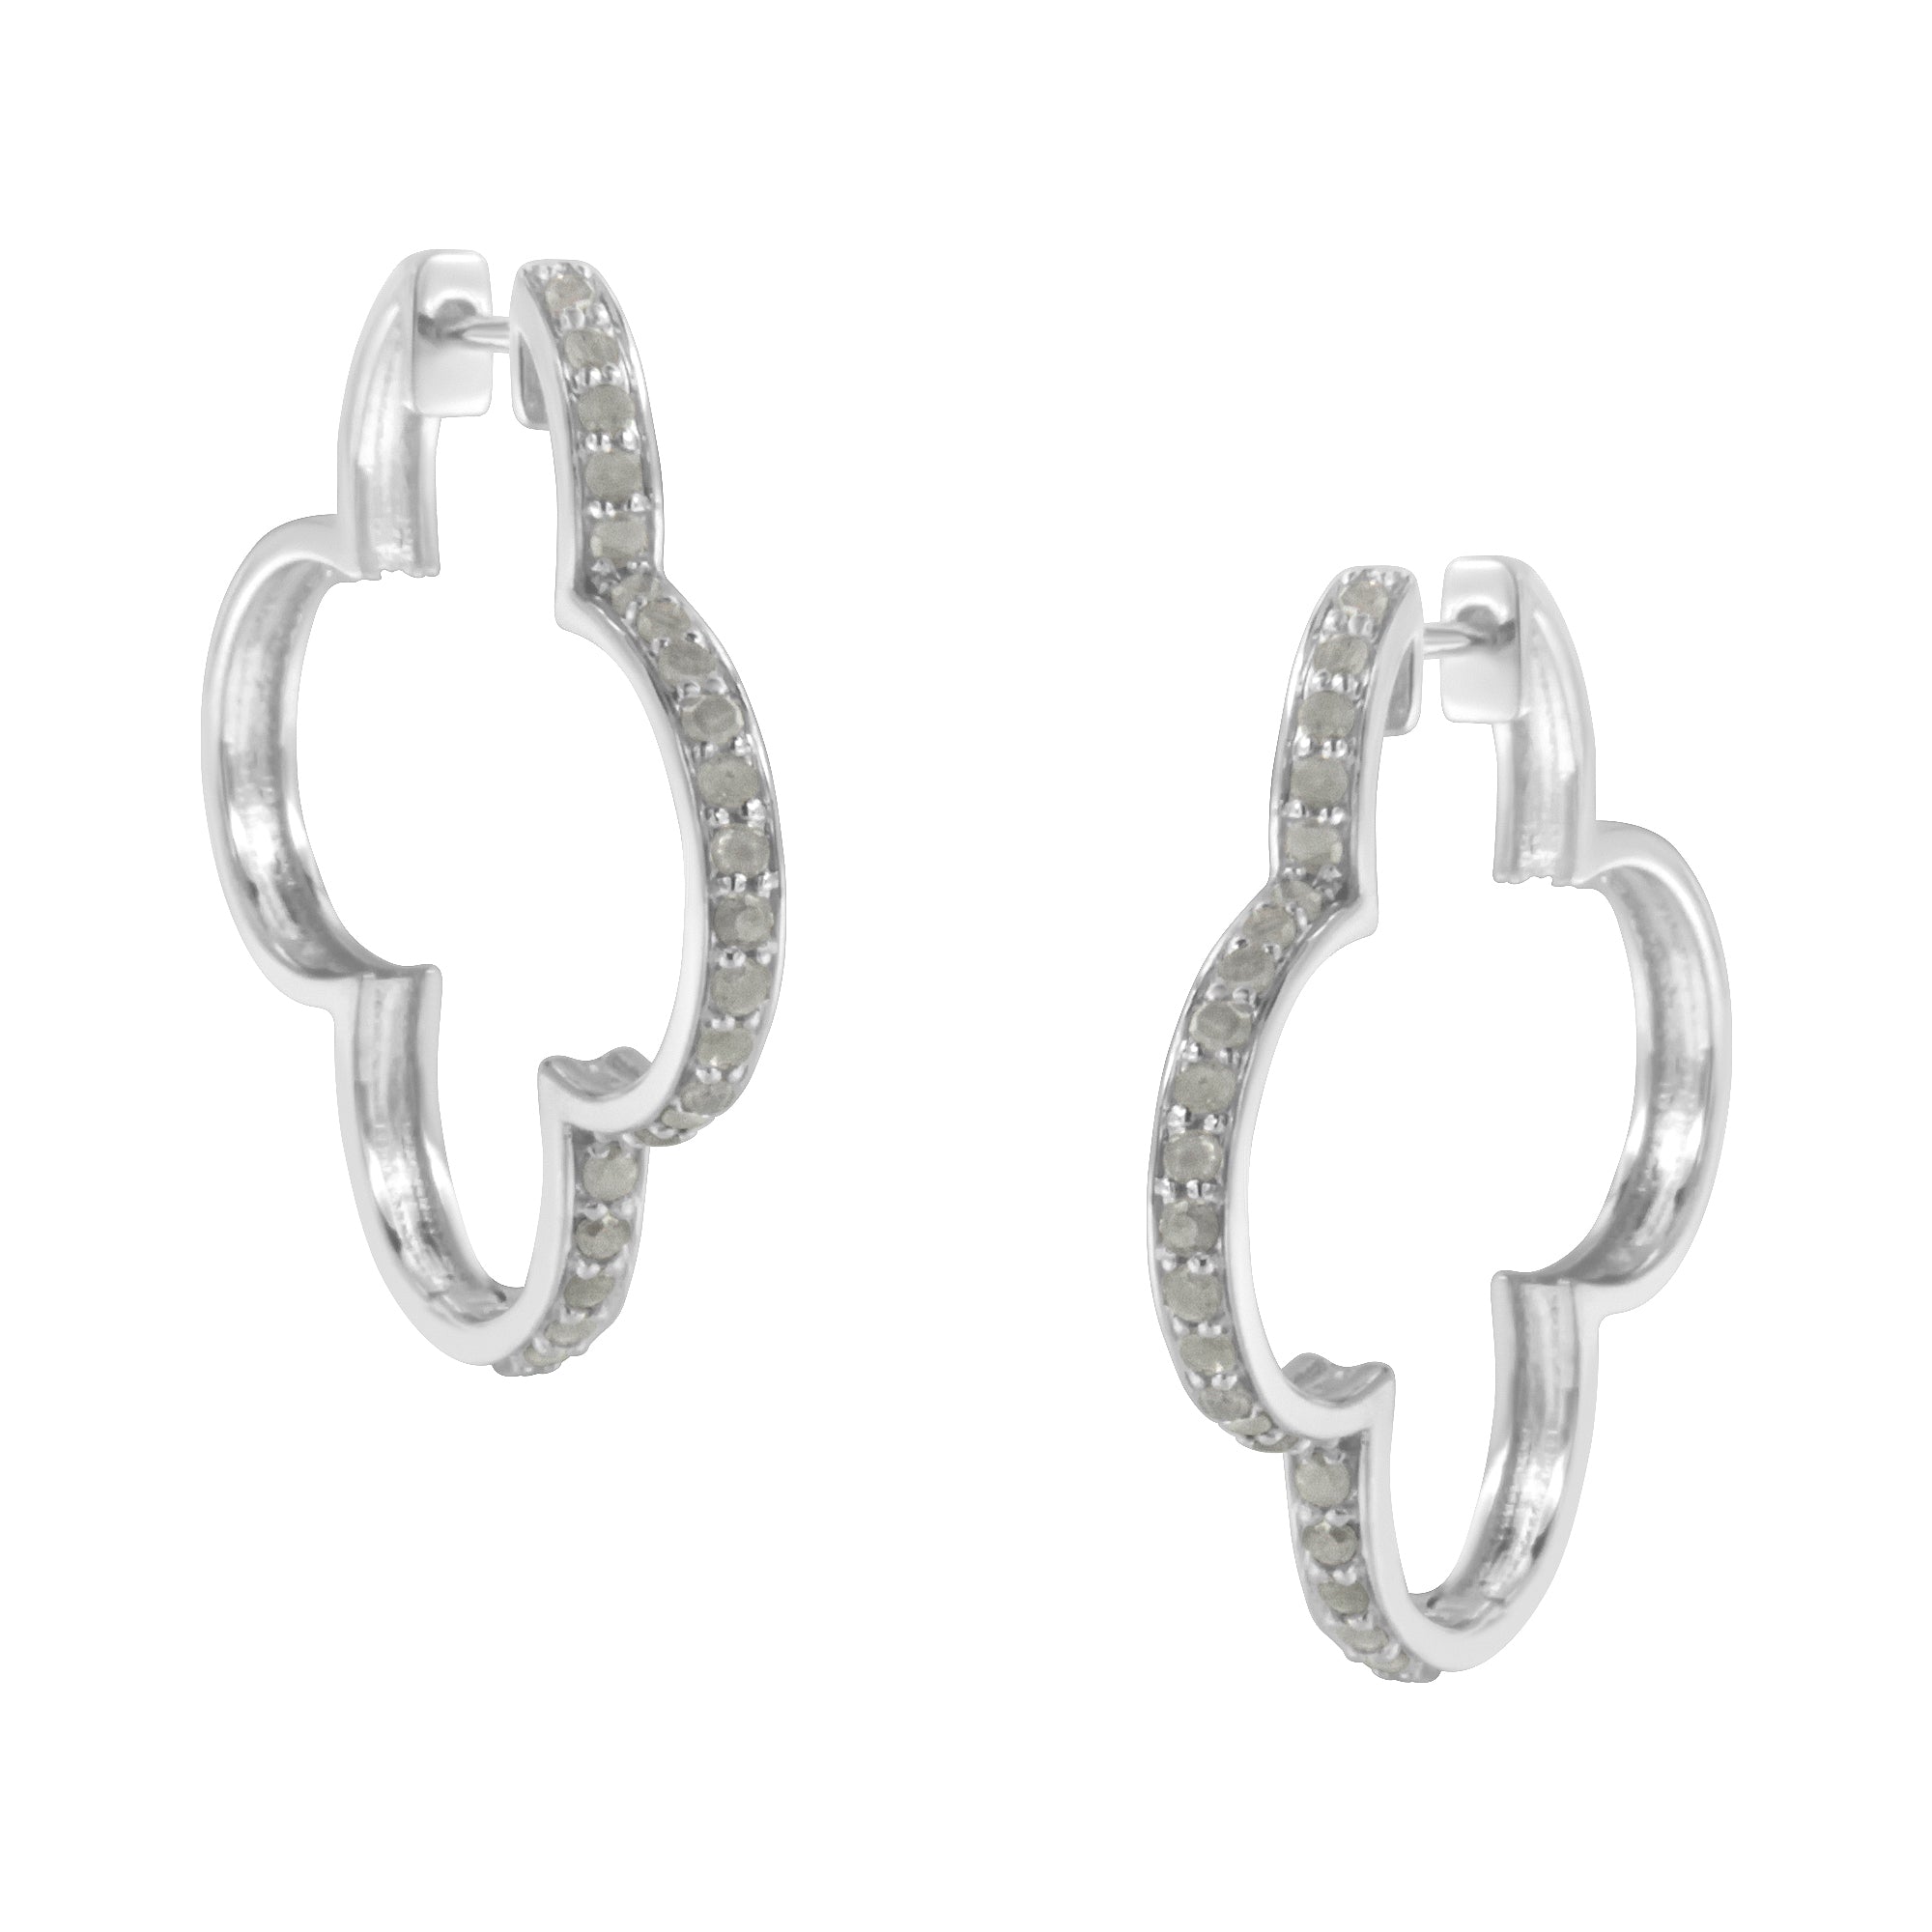 .925 Sterling Silver 1.0 cttw Diamond 4 Leaf Clover Shape Hoop Earrings(I-J Color, I3 Clarity) - LinkagejewelrydesignLinkagejewelrydesign